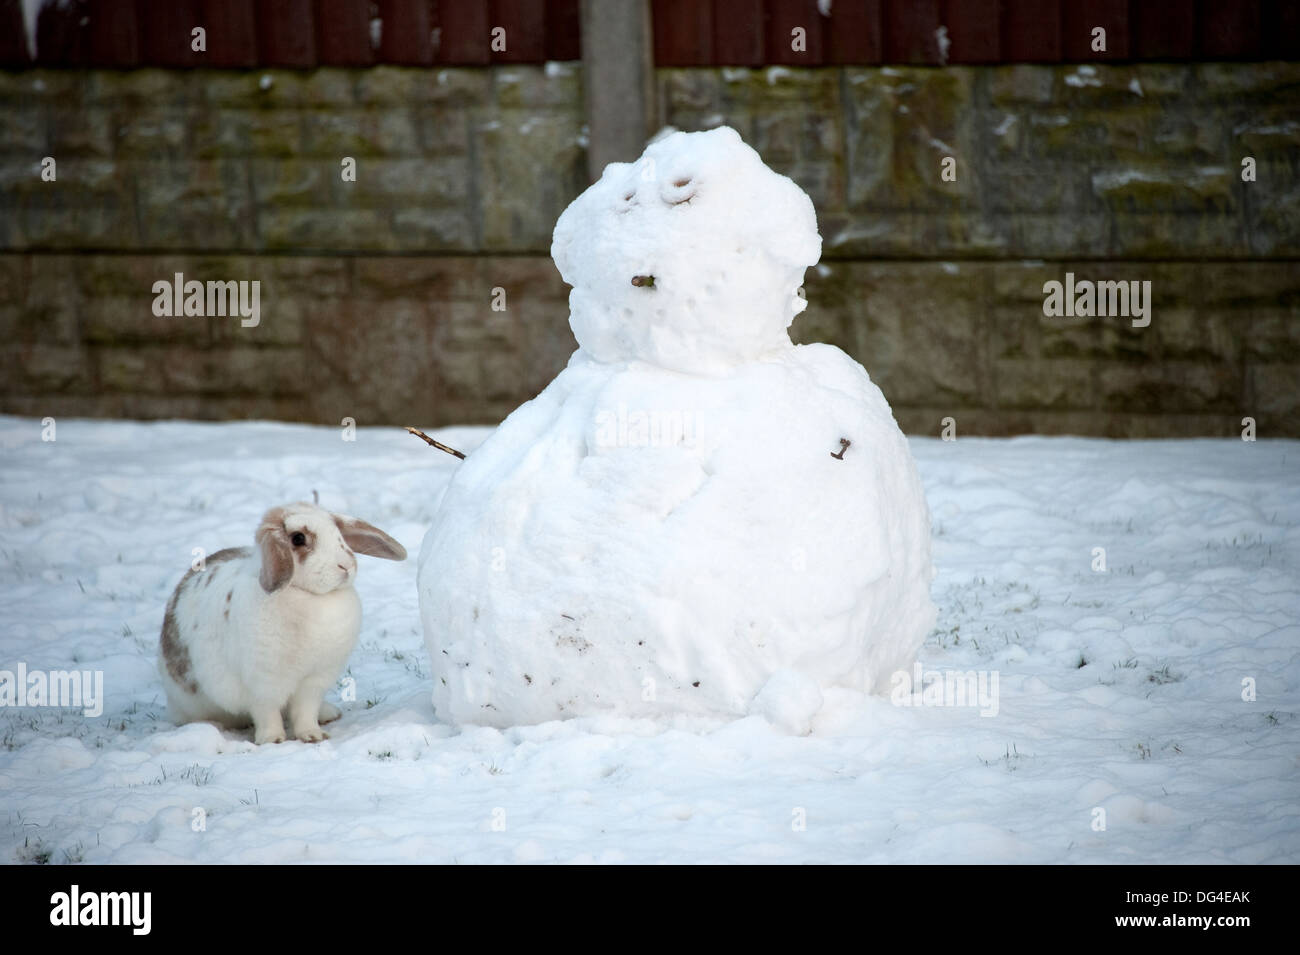 Lop eared white rabbit building snowman in winter Stock Photo